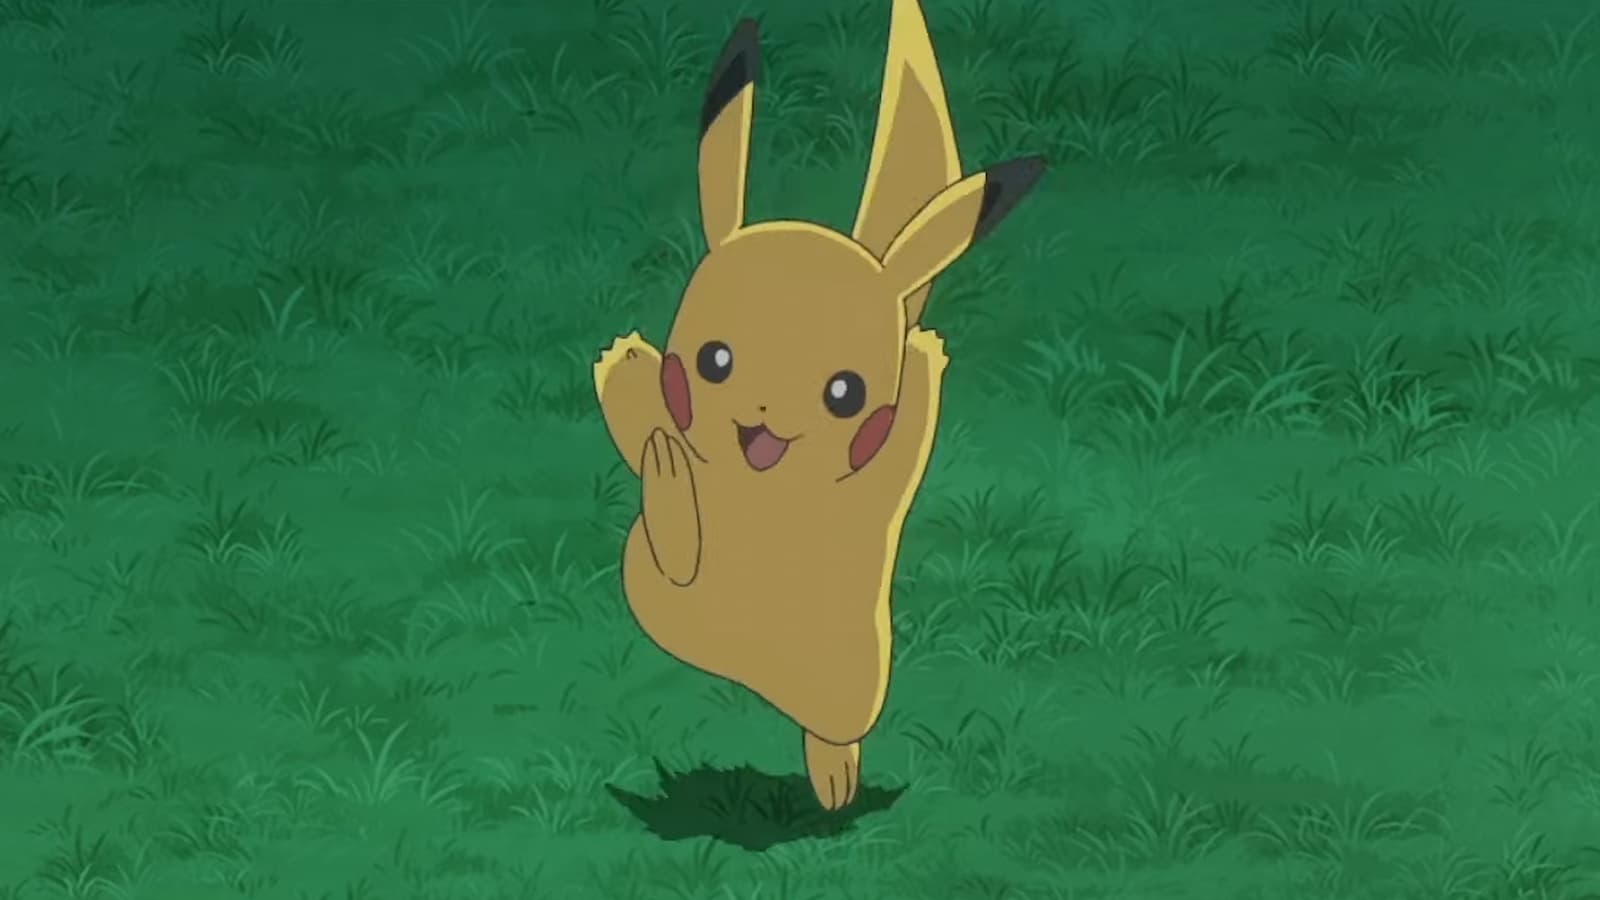 Pikachu becomes Flying-type in Pokemon Go avatar glitch